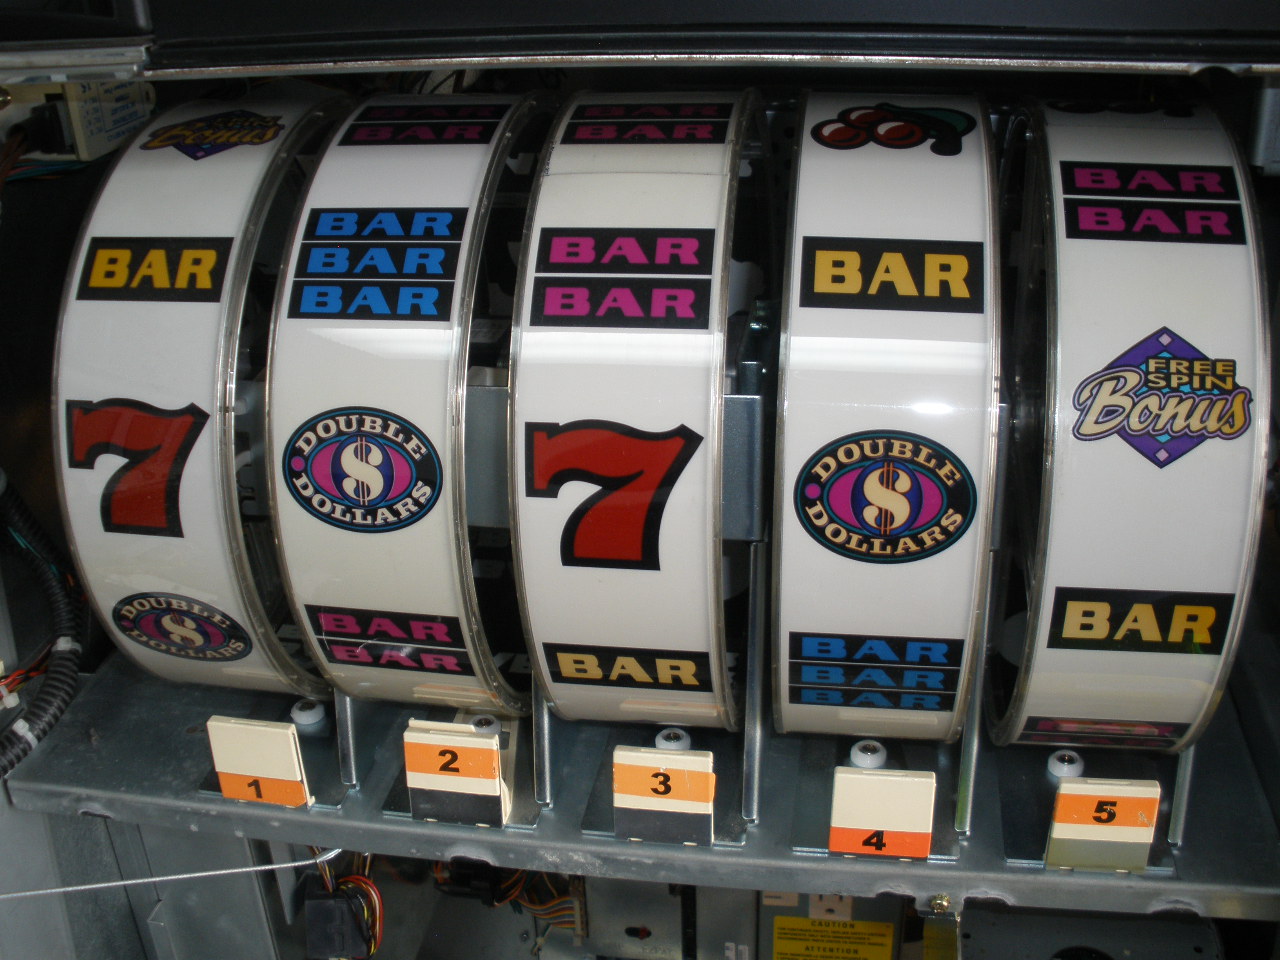 slot machines 5 reels